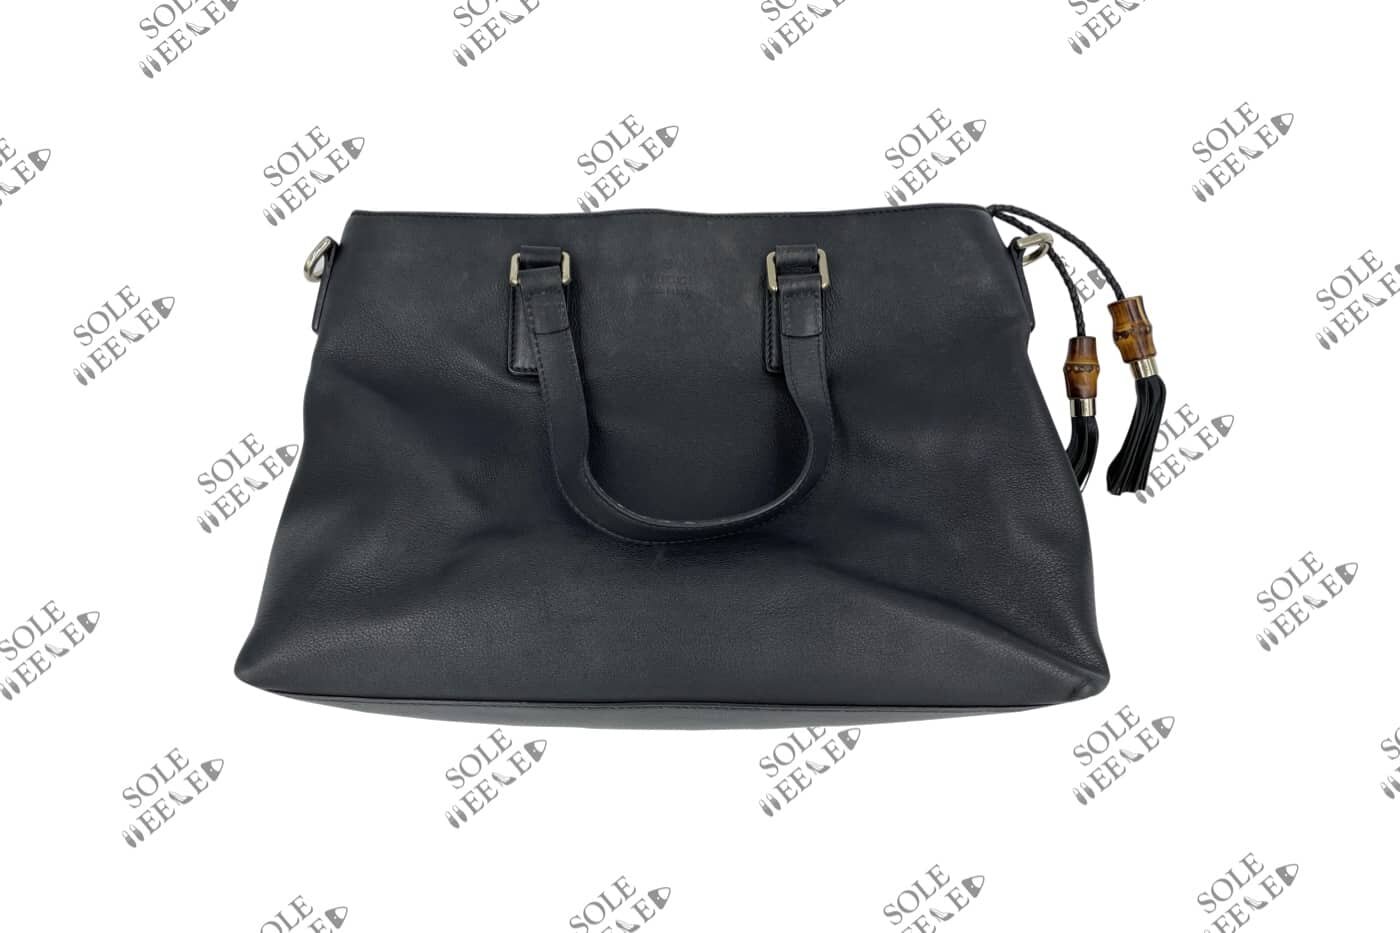 Gucci handbag lining replacement